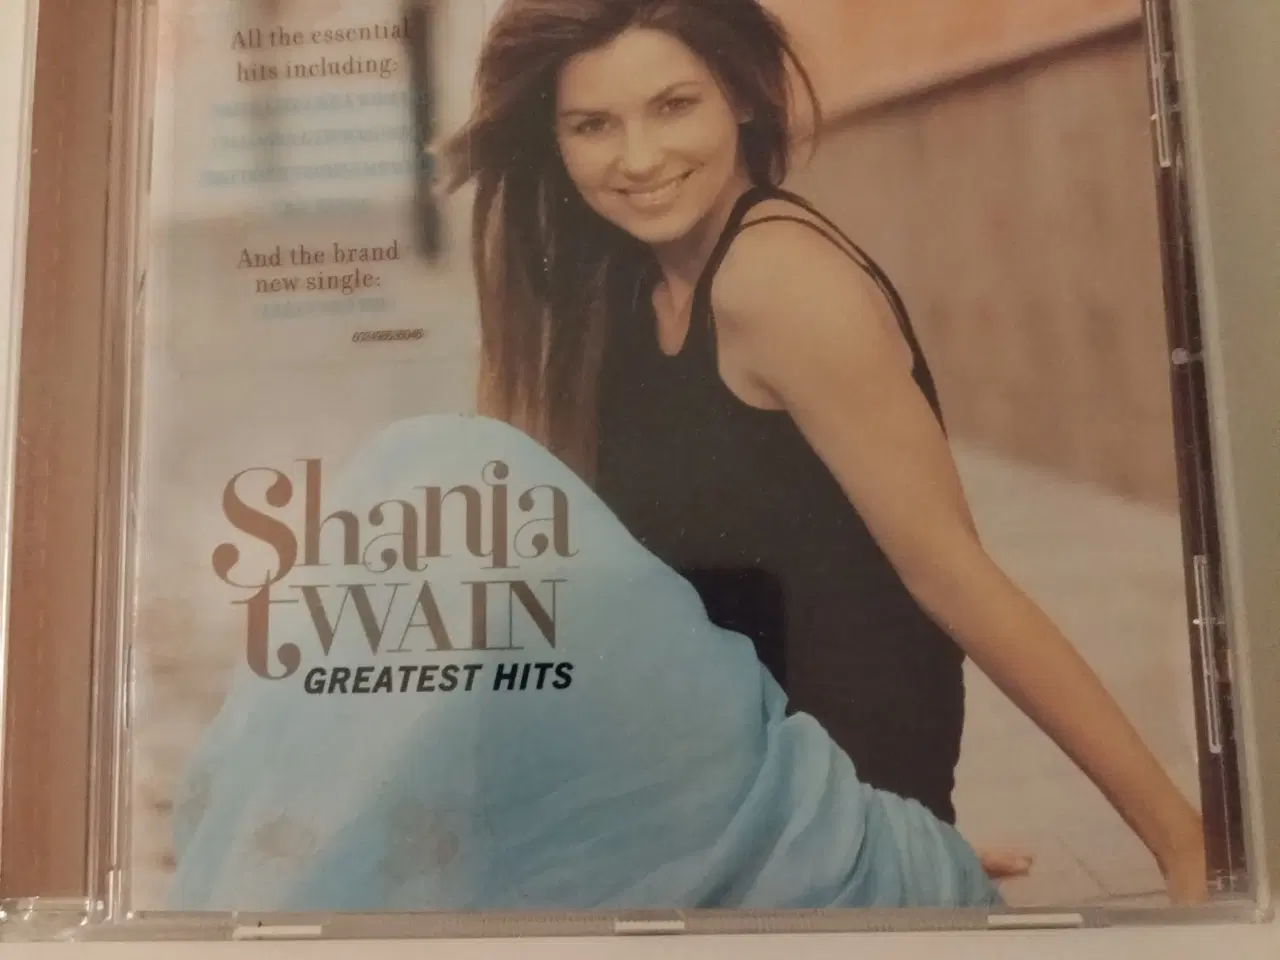 Billede 1 - CD "Shania twain" greatest hits